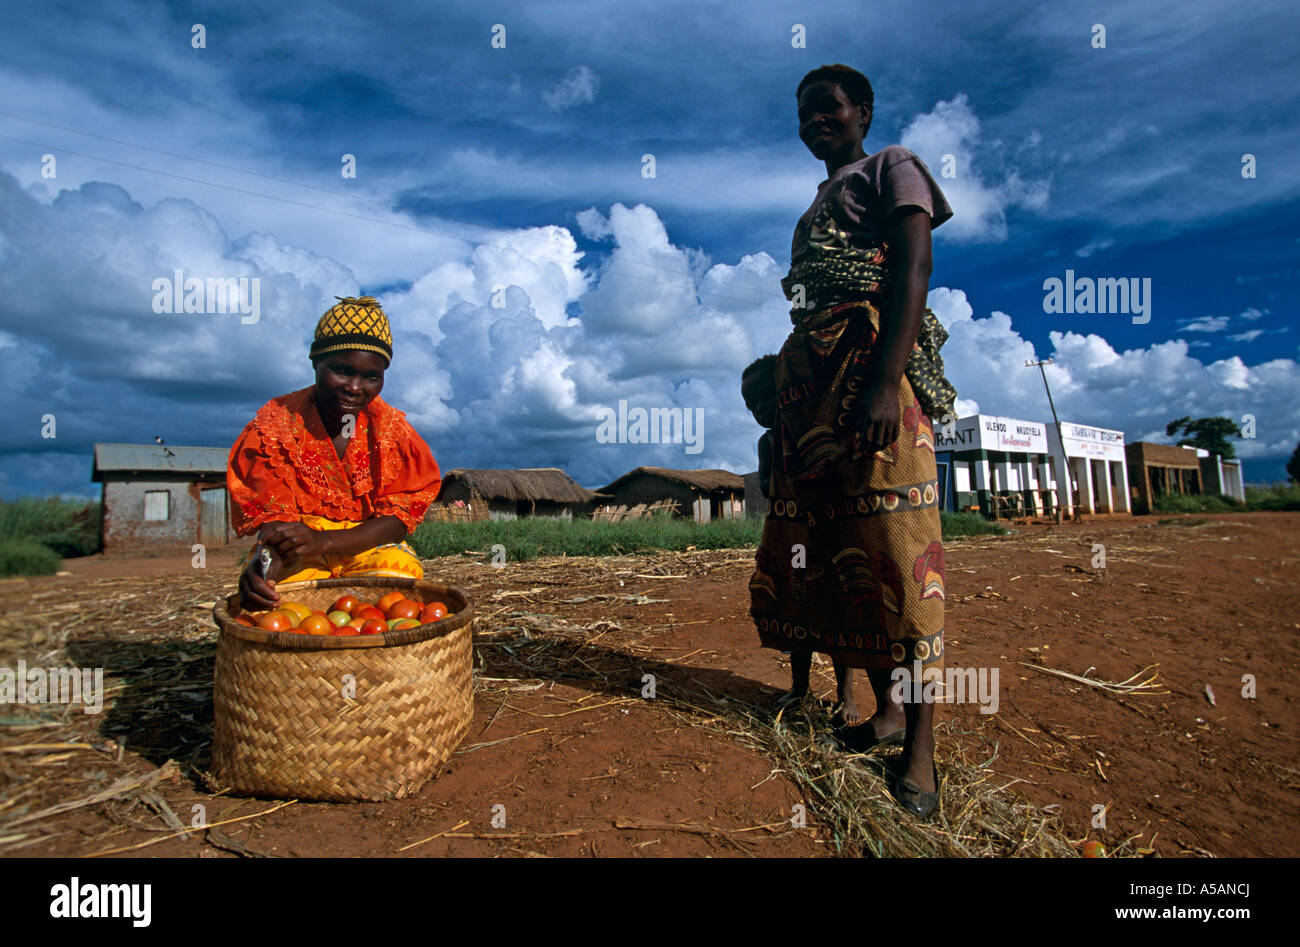 Woman selling tomatoes on roadside, Malawi, Africa Stock Photo